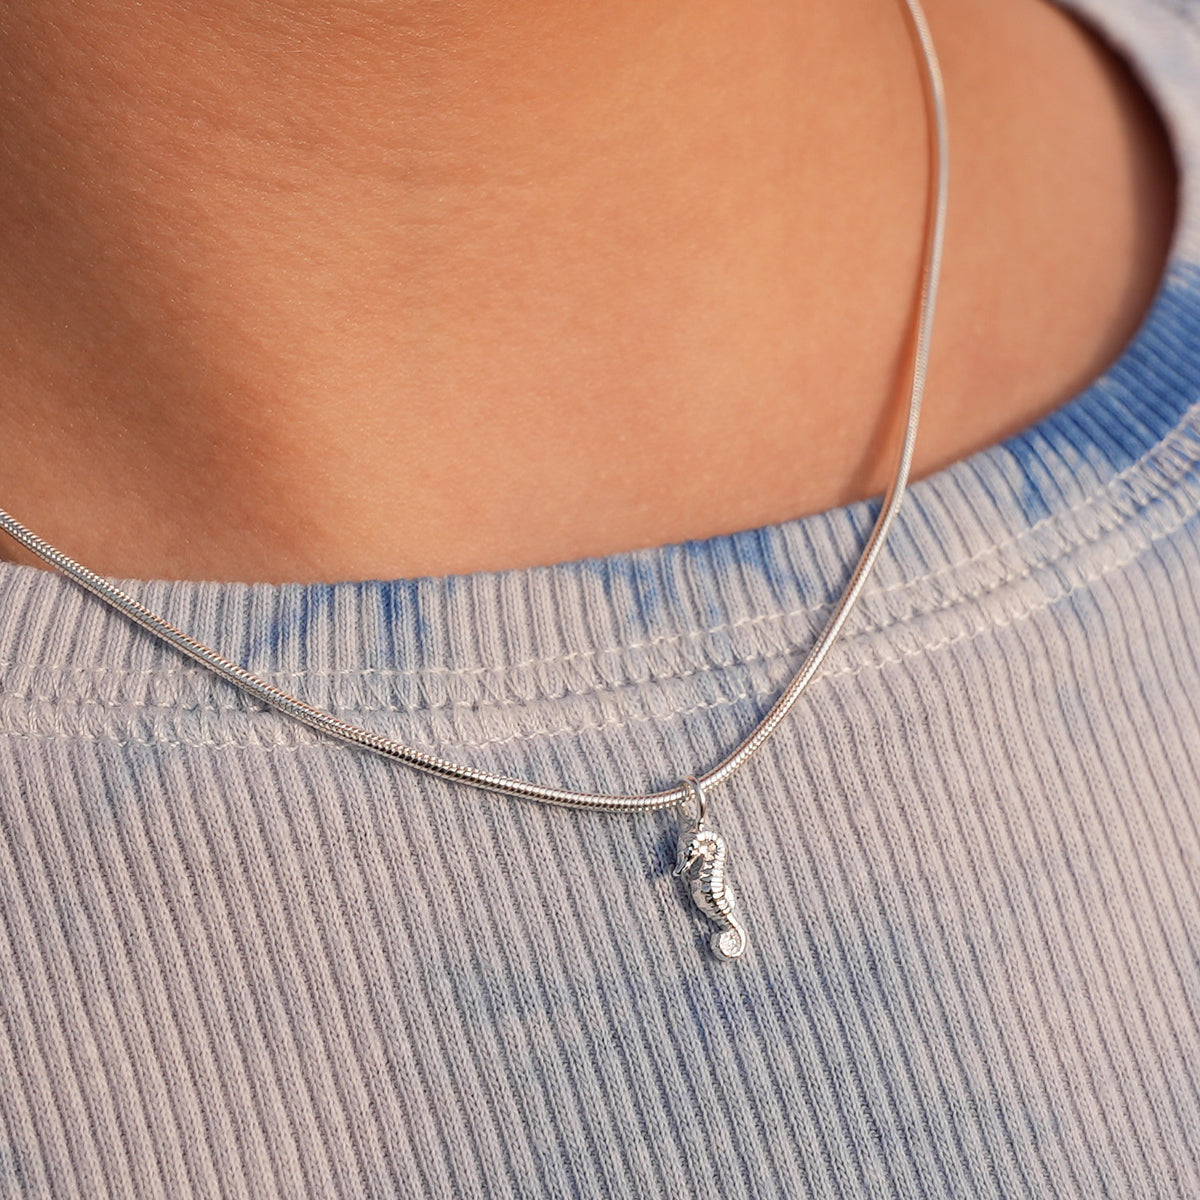 Kids necklace "Seahorse" - silver